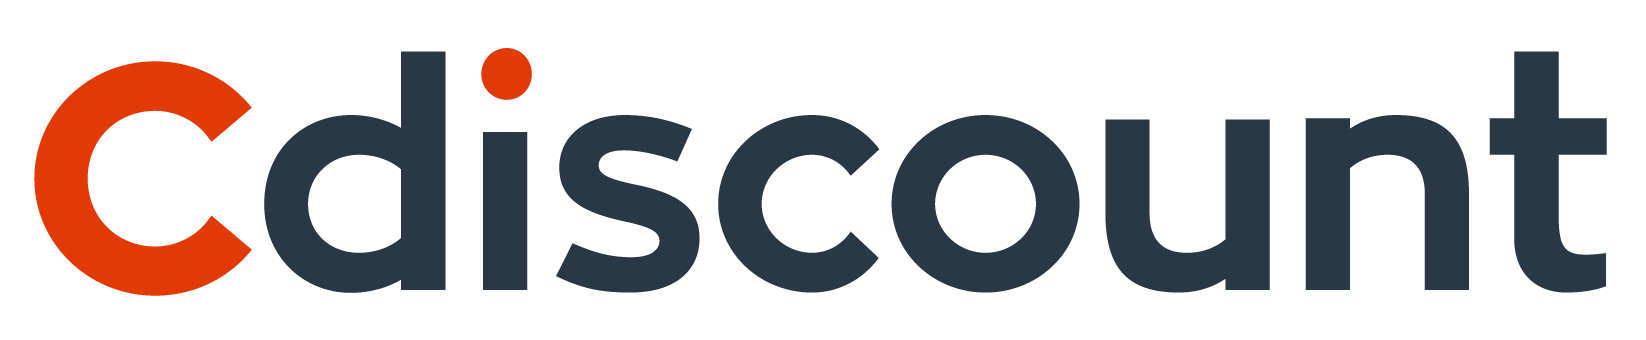 Corporation logo